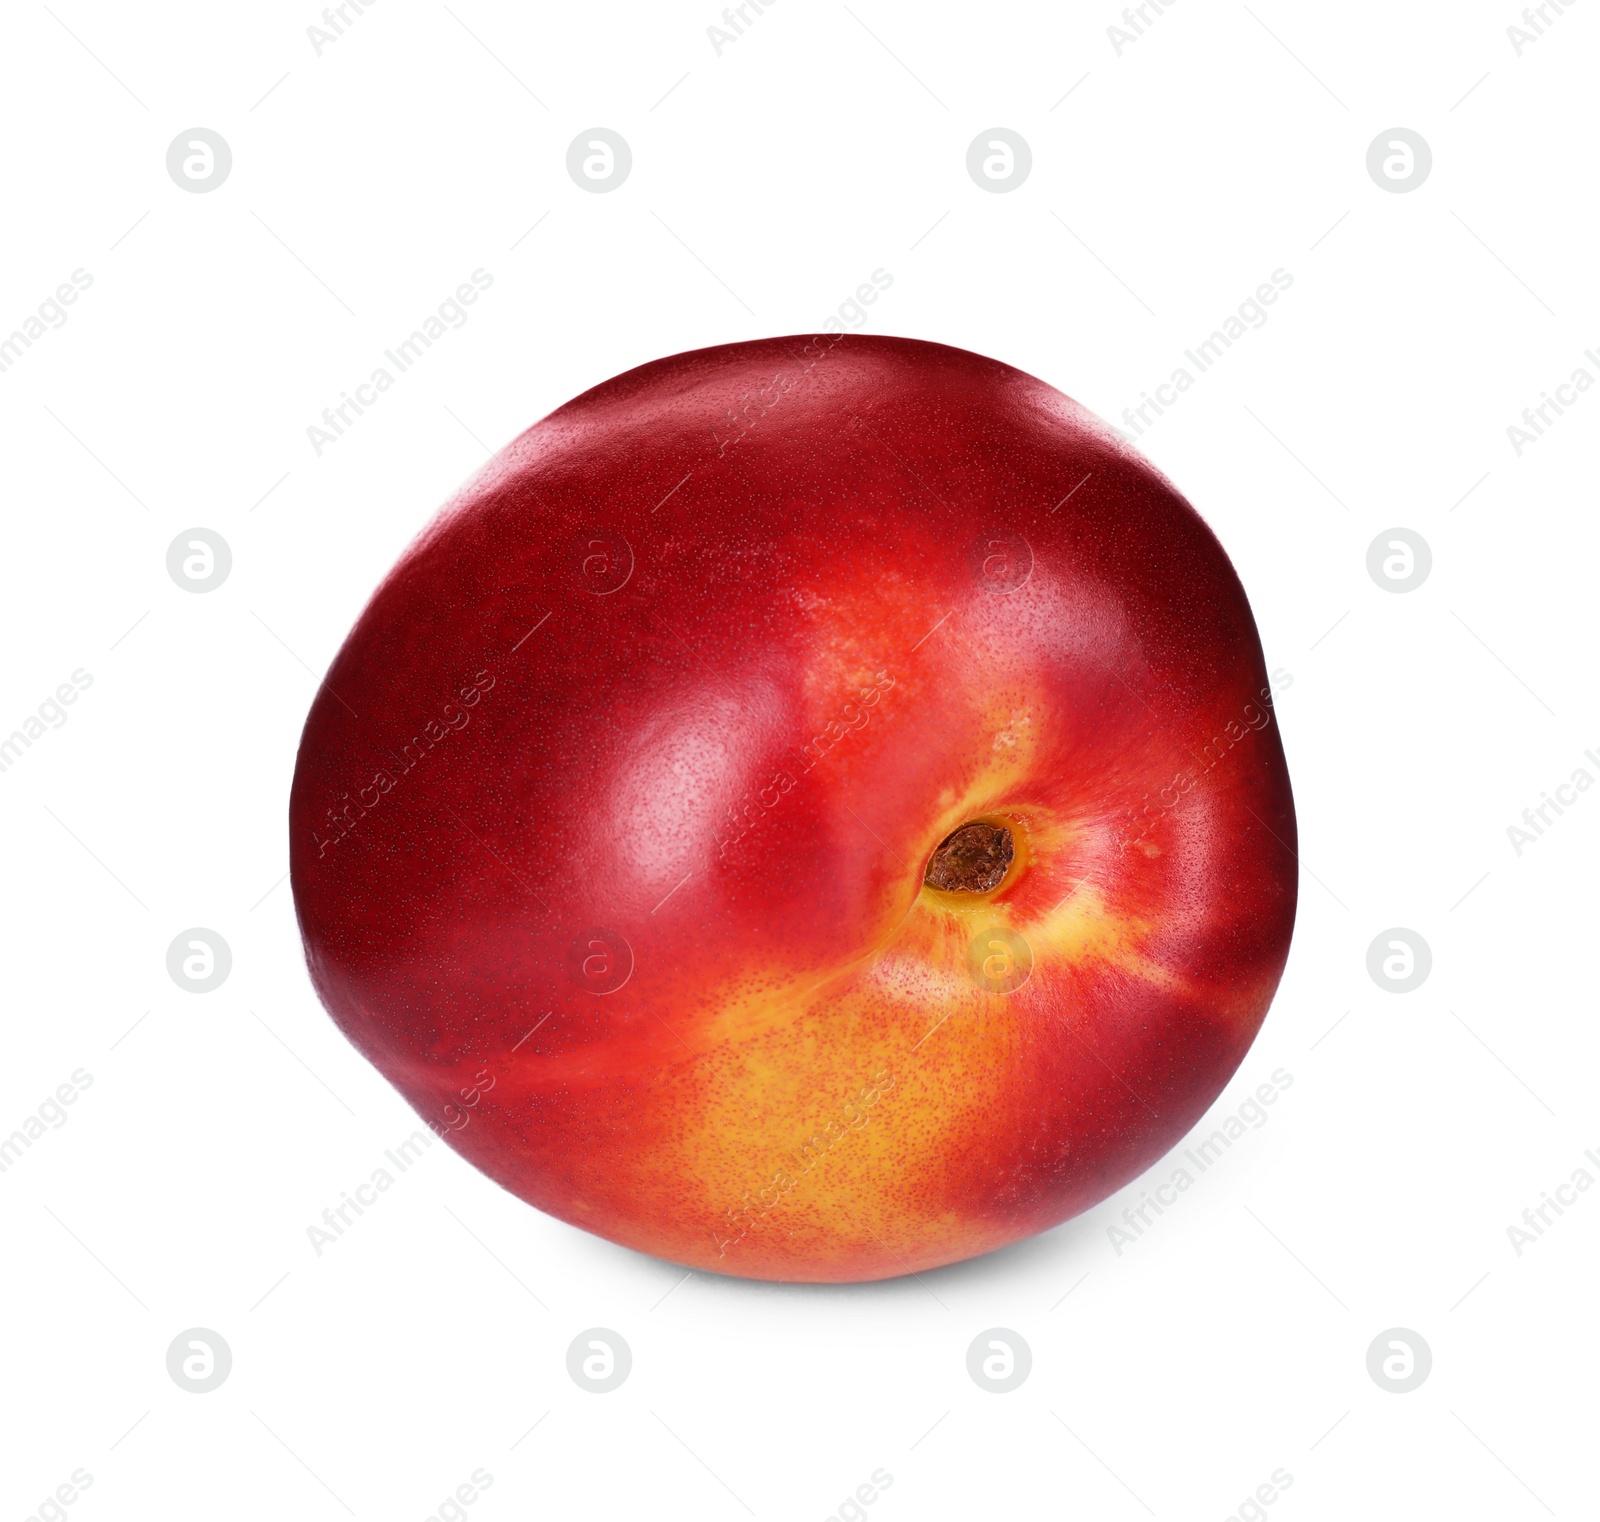 Photo of Sweet red juicy nectarine on white background